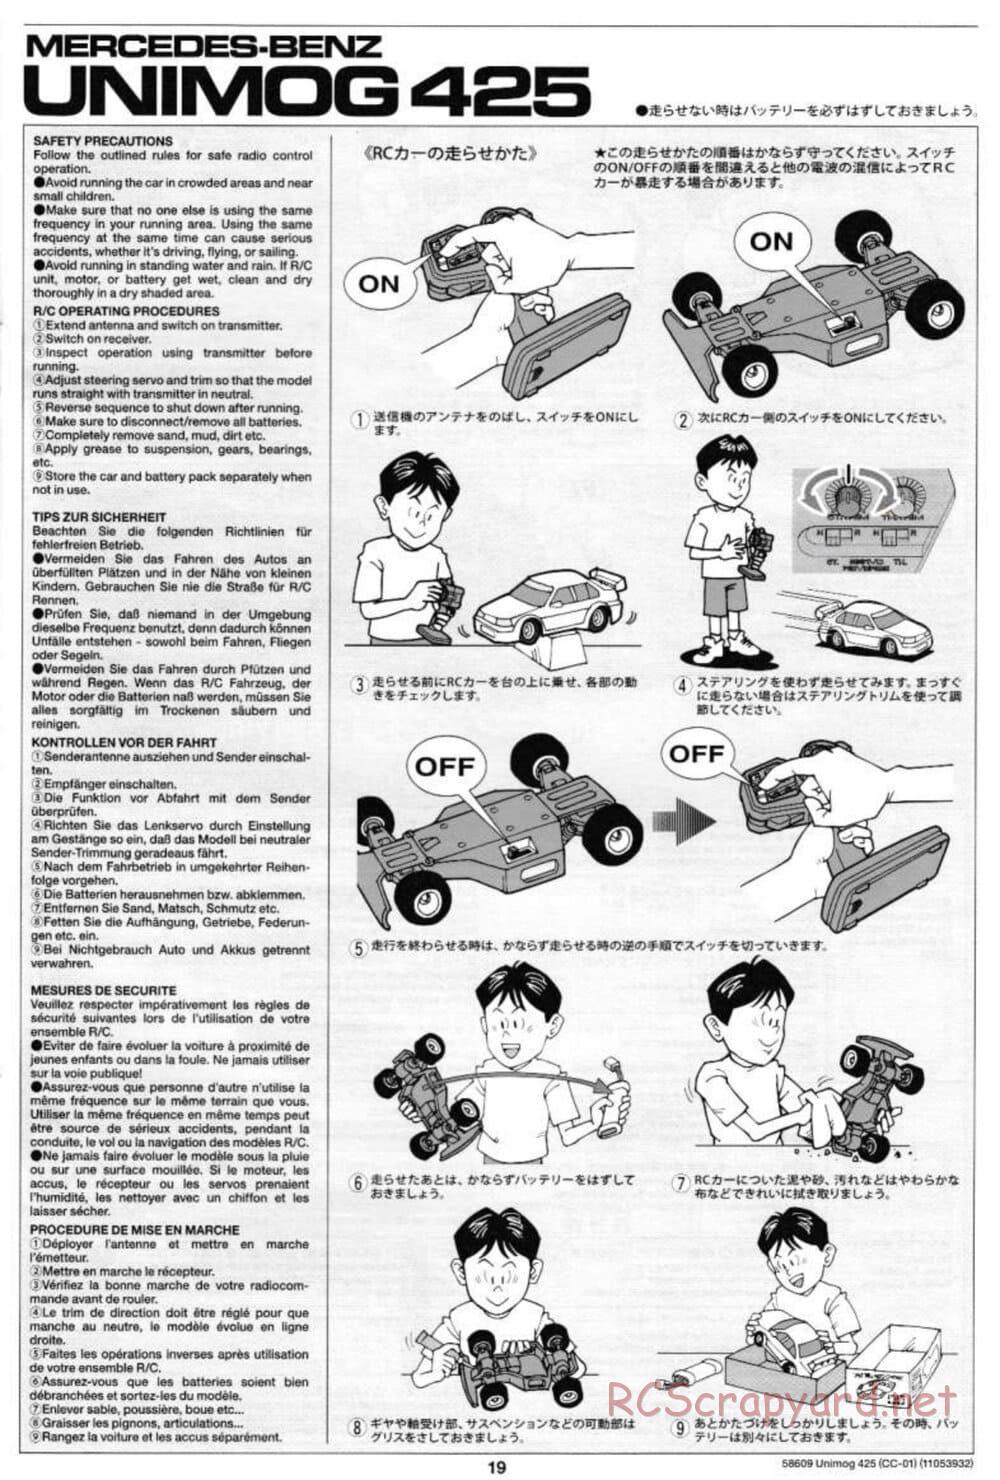 Tamiya - Mercedes-Benz Unimog 425 - CC-01 Chassis - Manual - Page 19